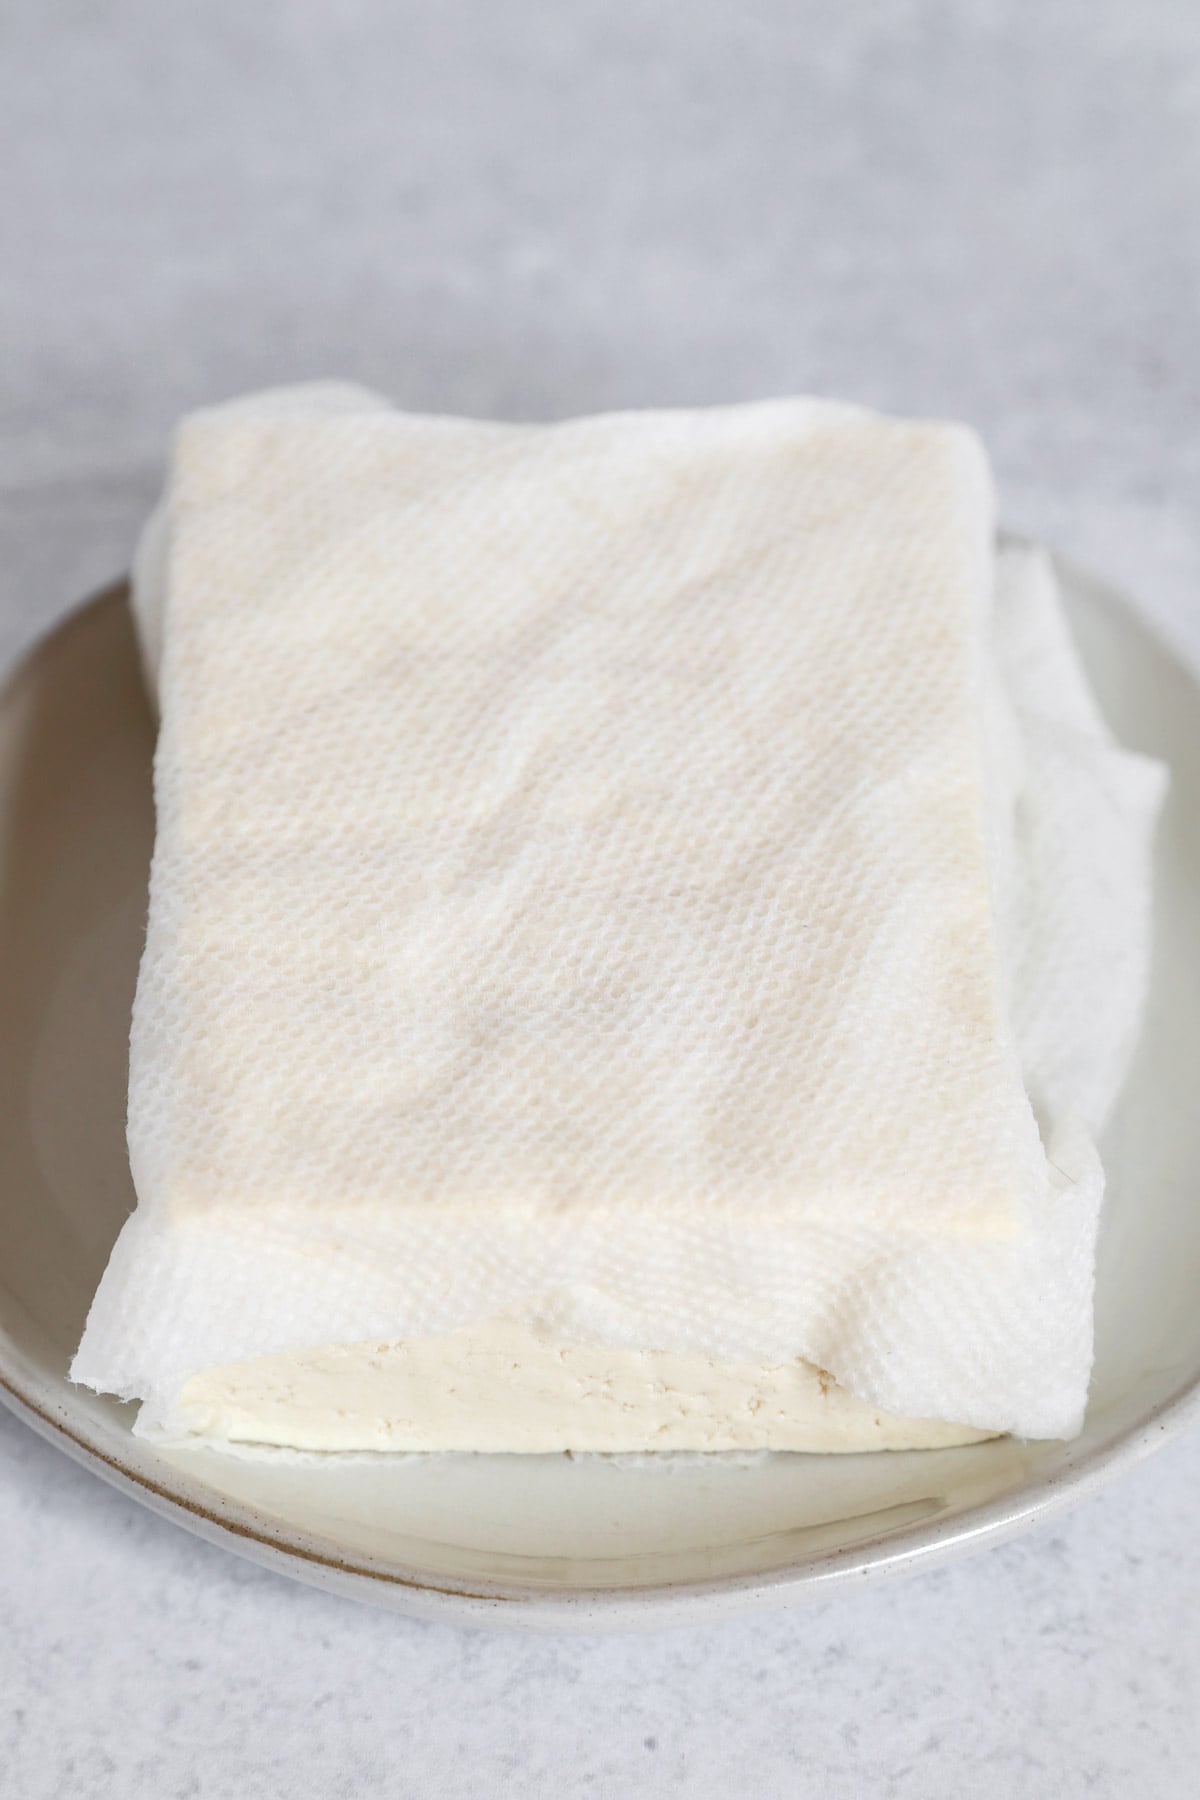 tofu wrapped paper towel